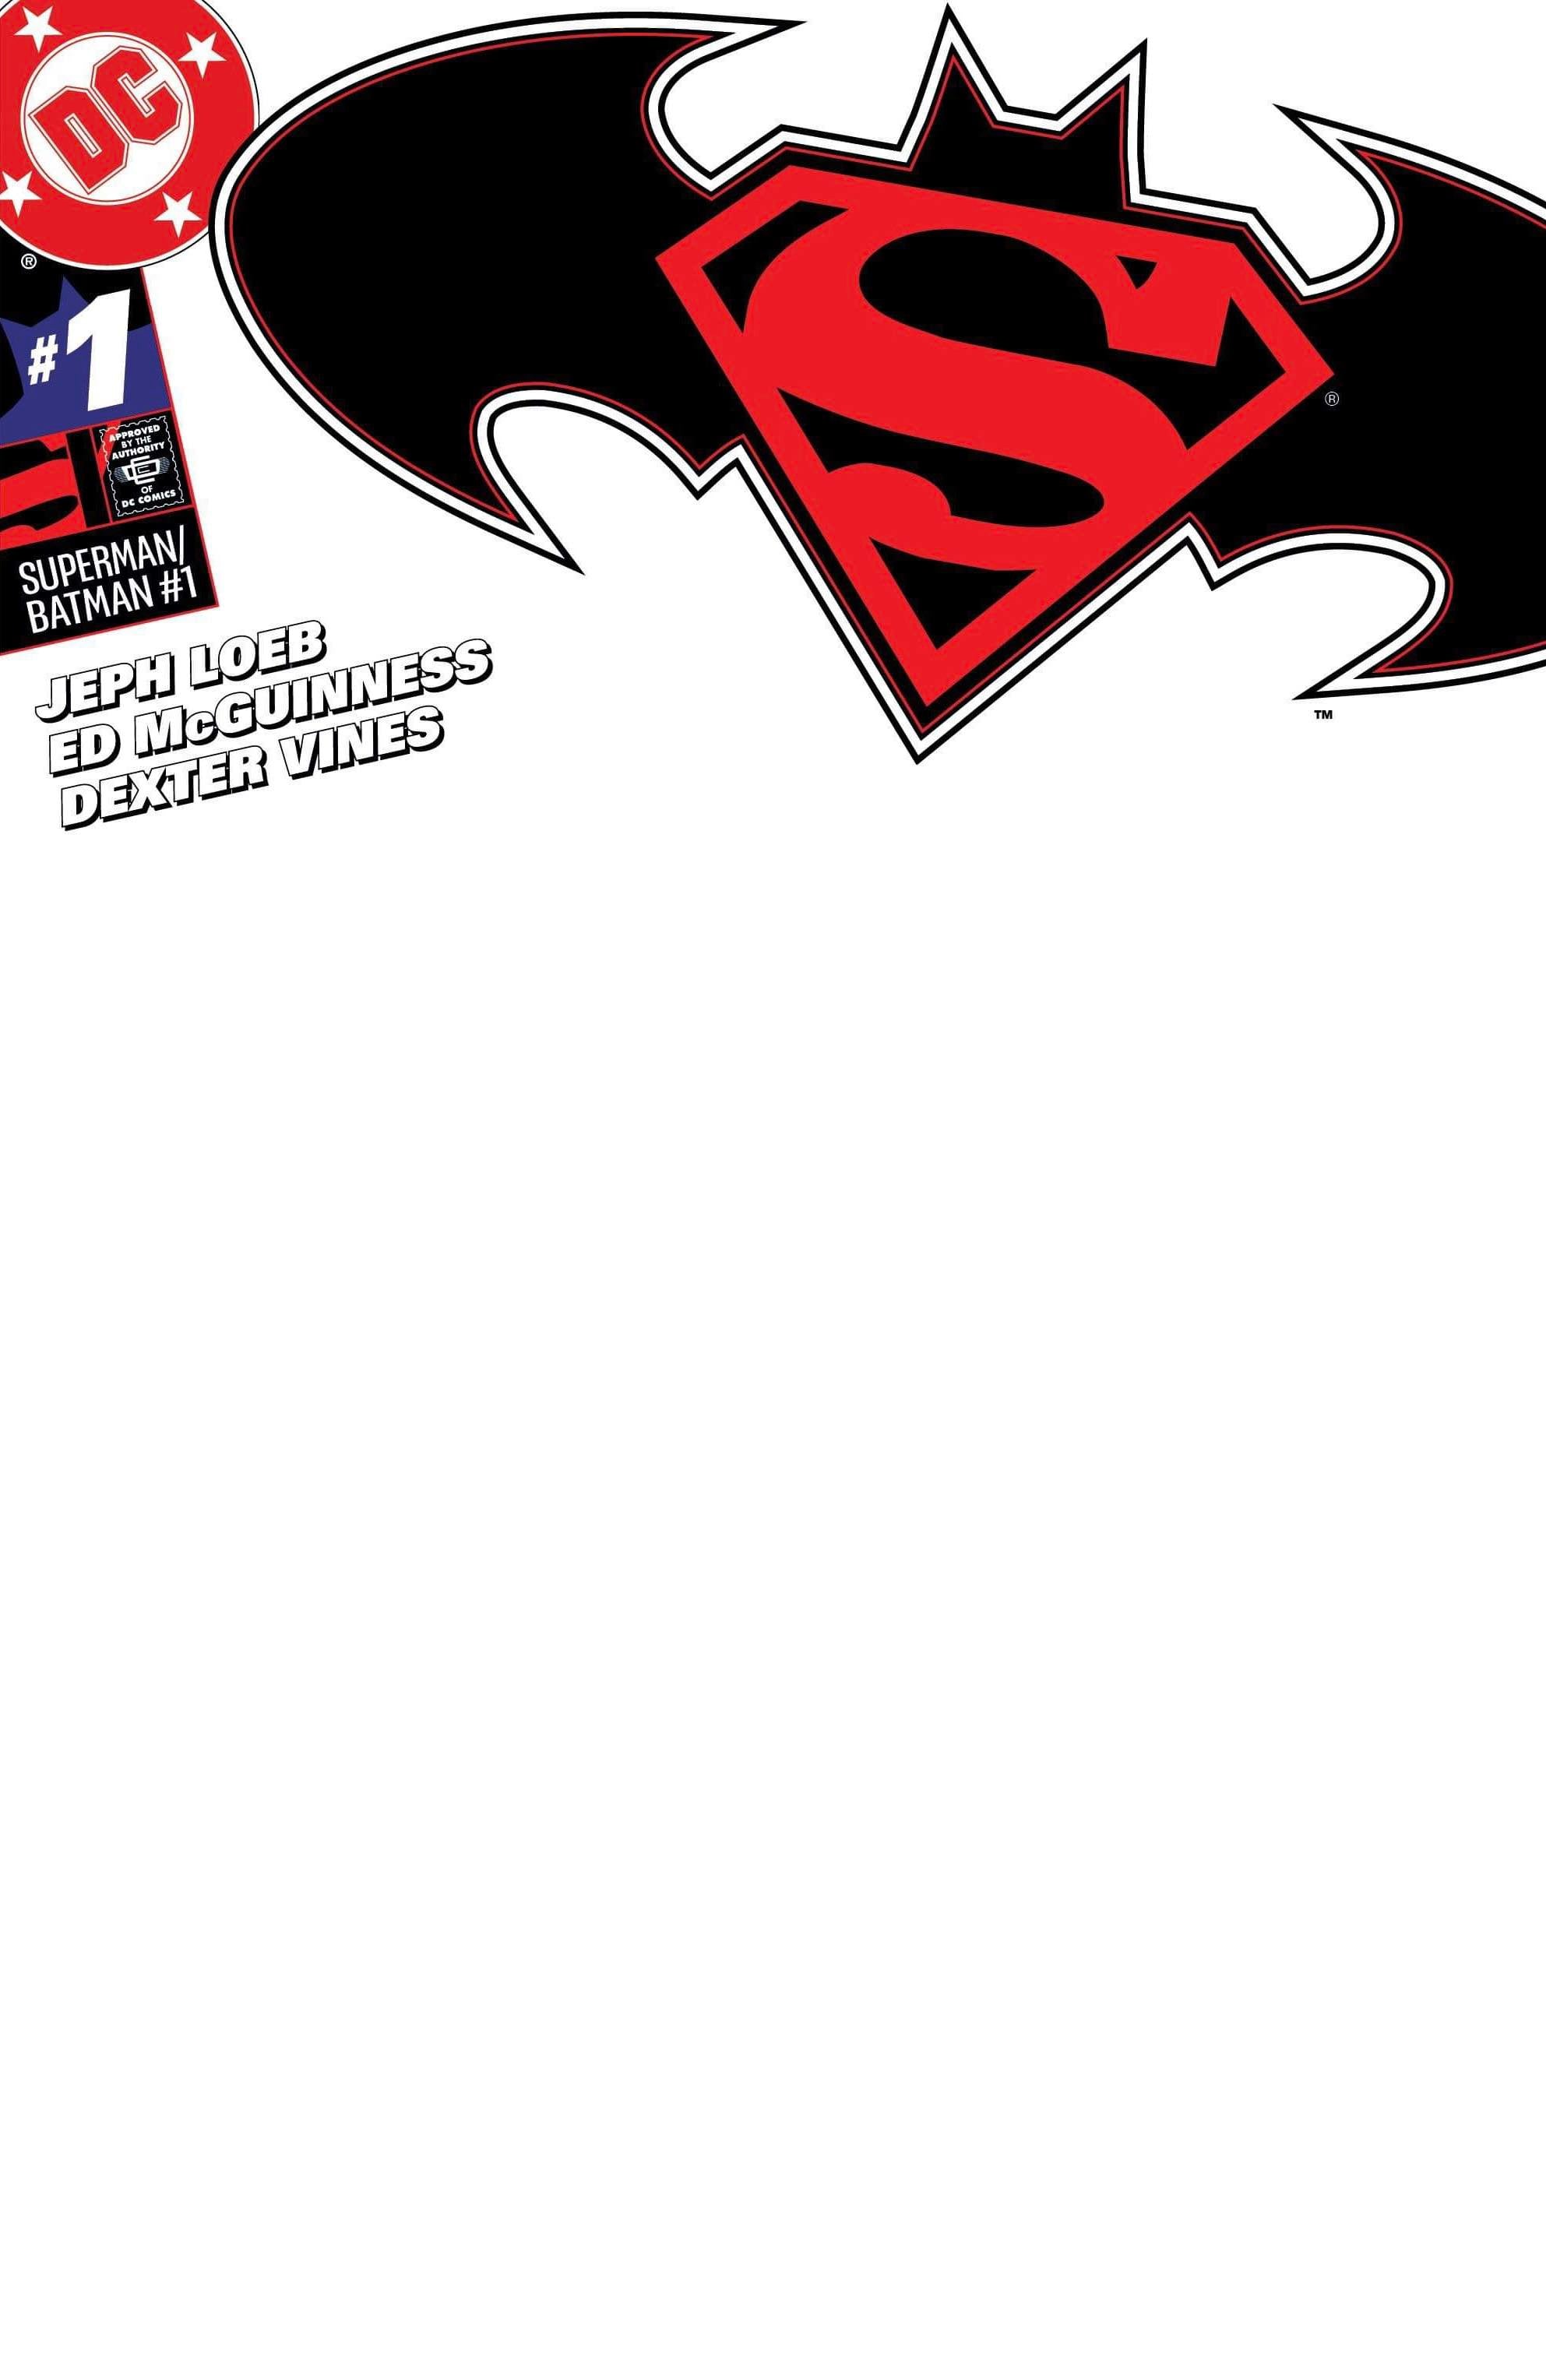 SUPERMAN BATMAN #1 SPECIAL EDITION BLANK VARIANT